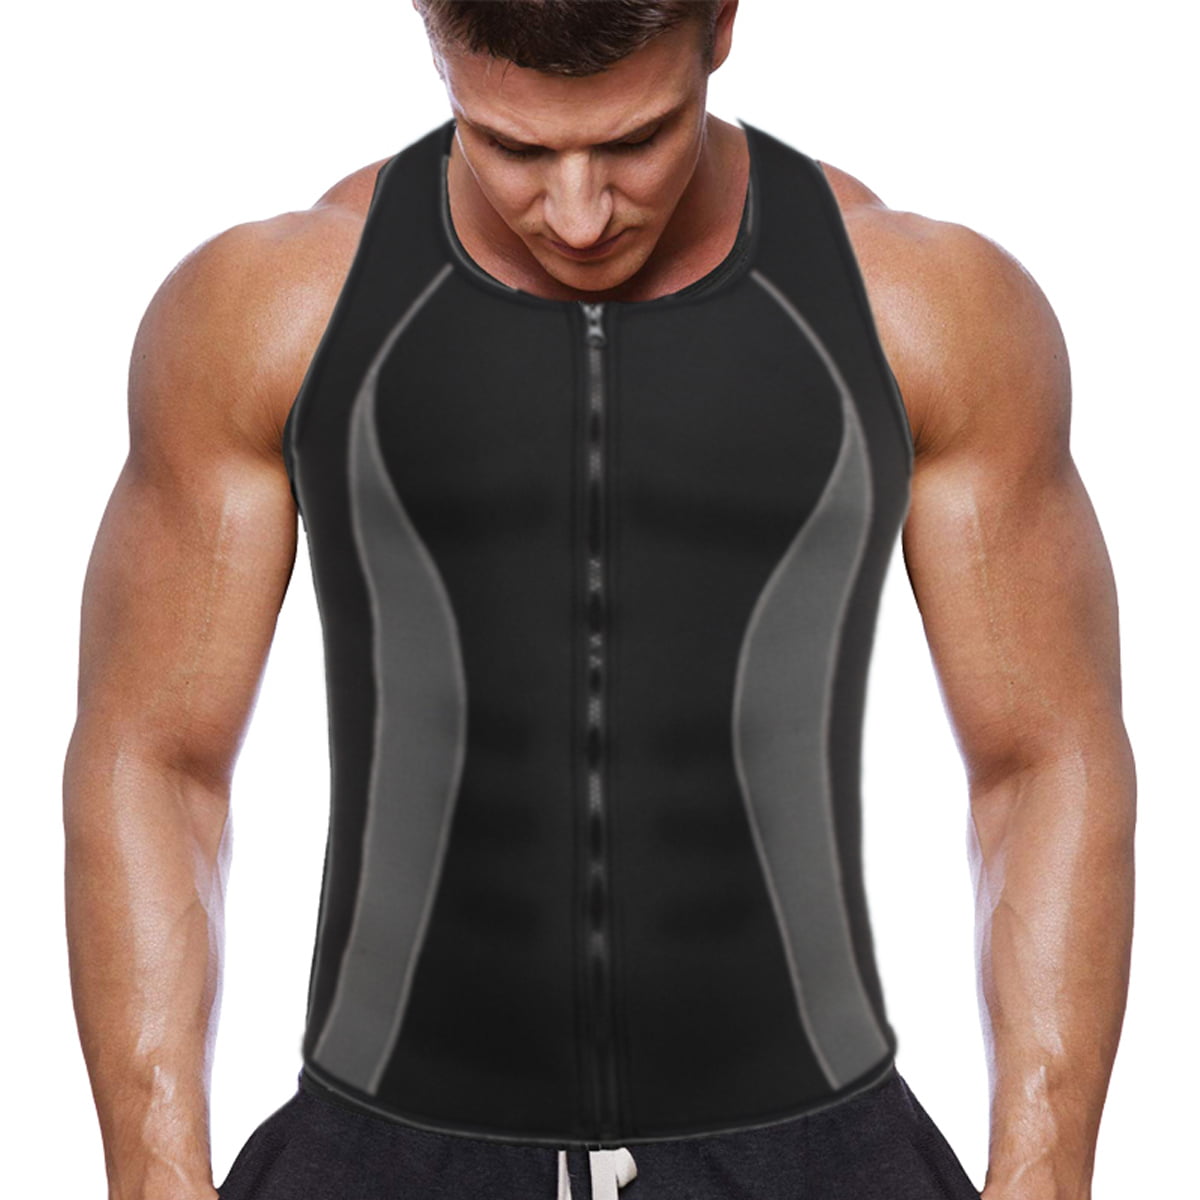 Details about   Men Waist Trainer Corset Vest for Weight Loss Top Sauna Hot Neoprene Body Shaper 